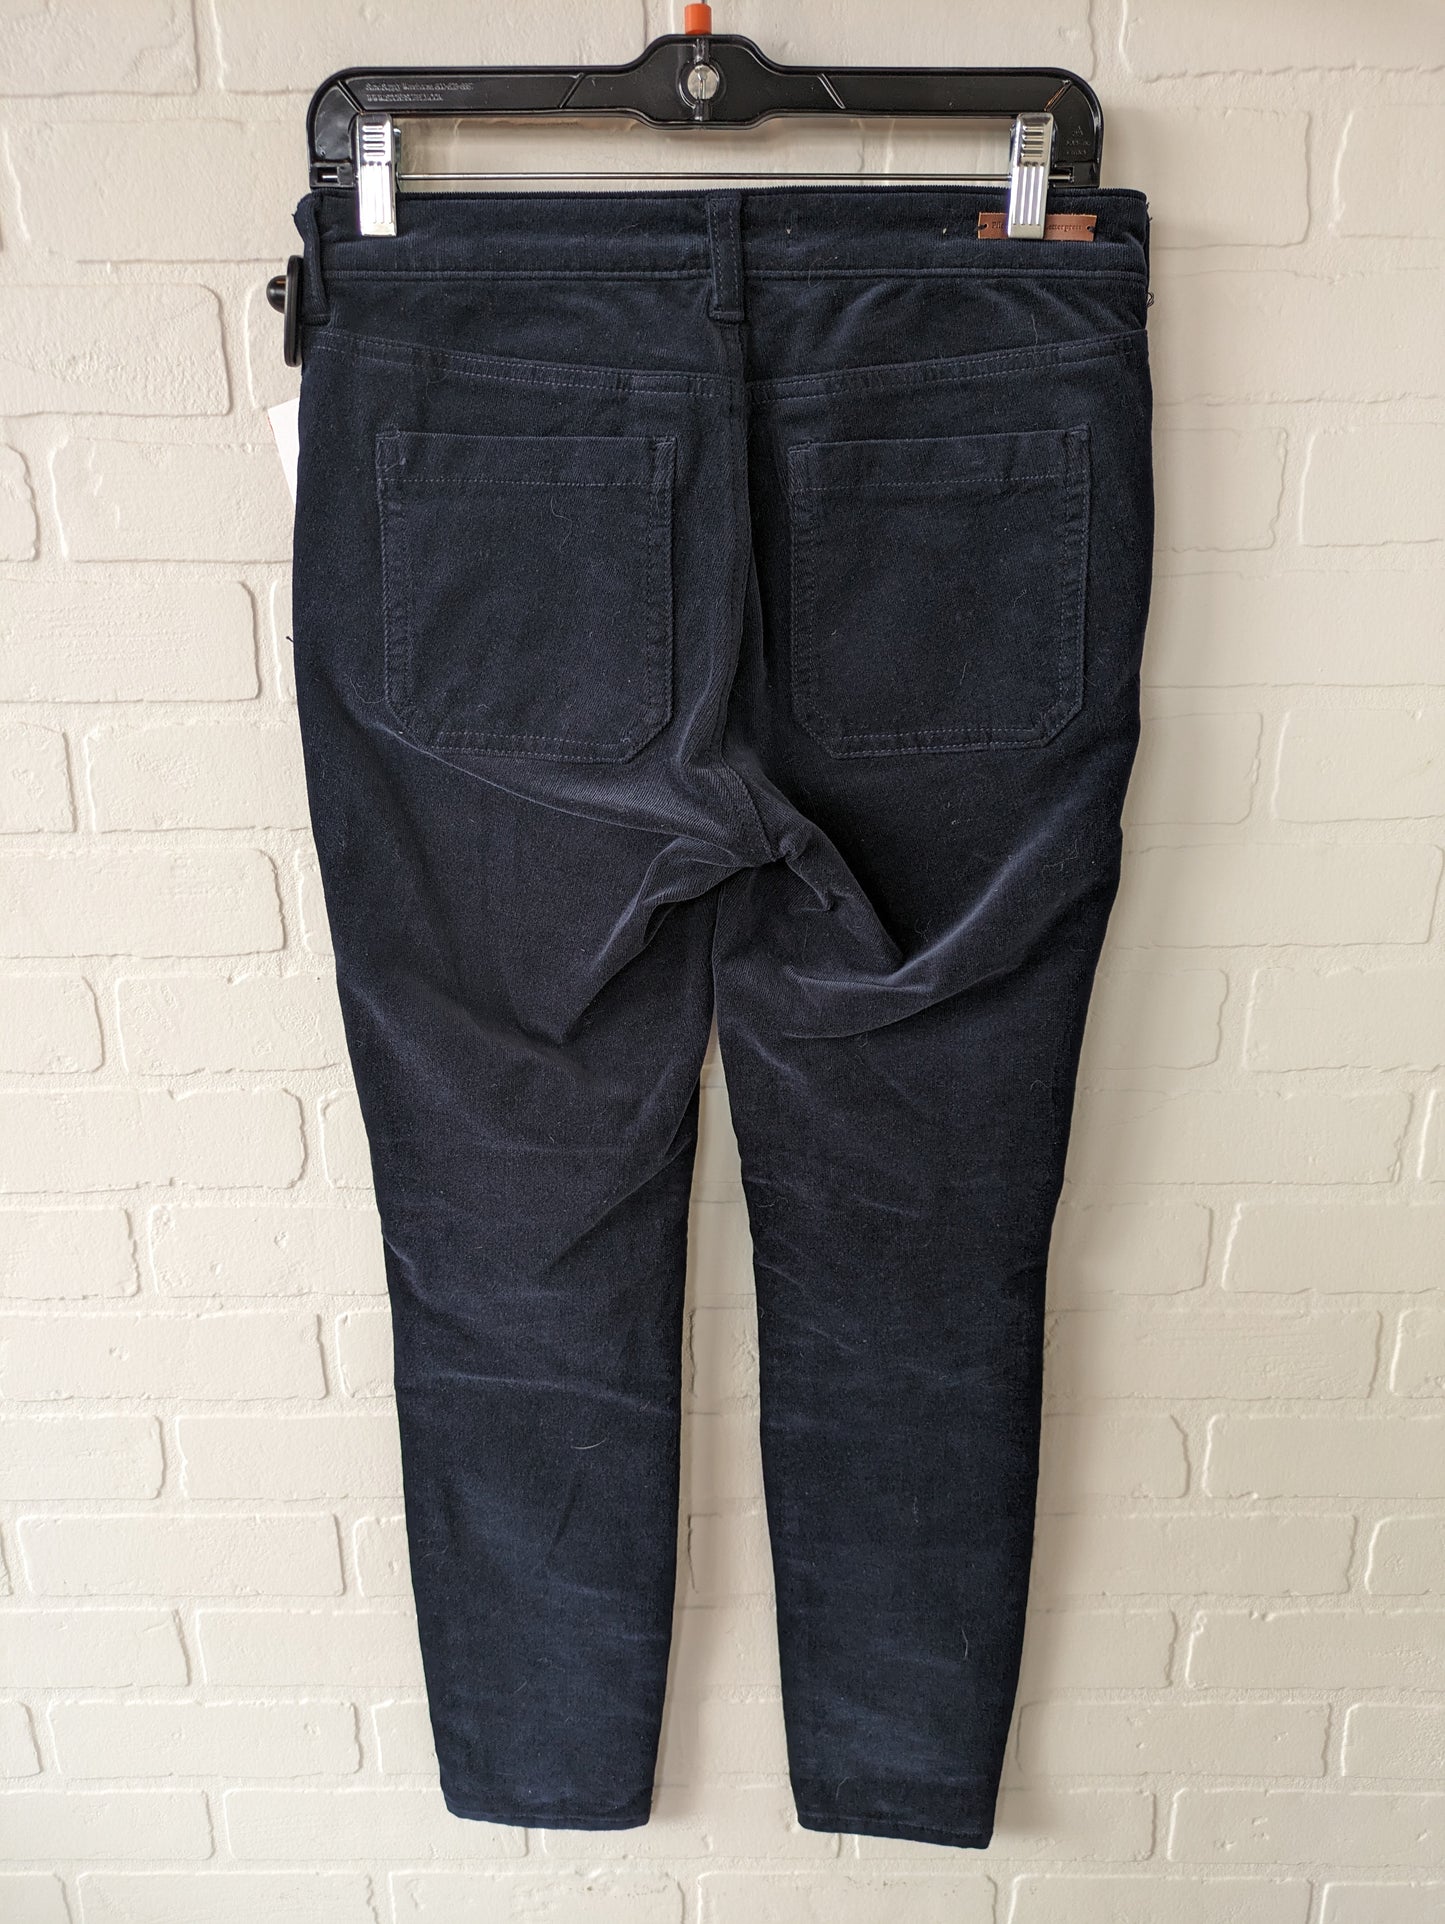 Pants Corduroy By Pilcro  Size: 4